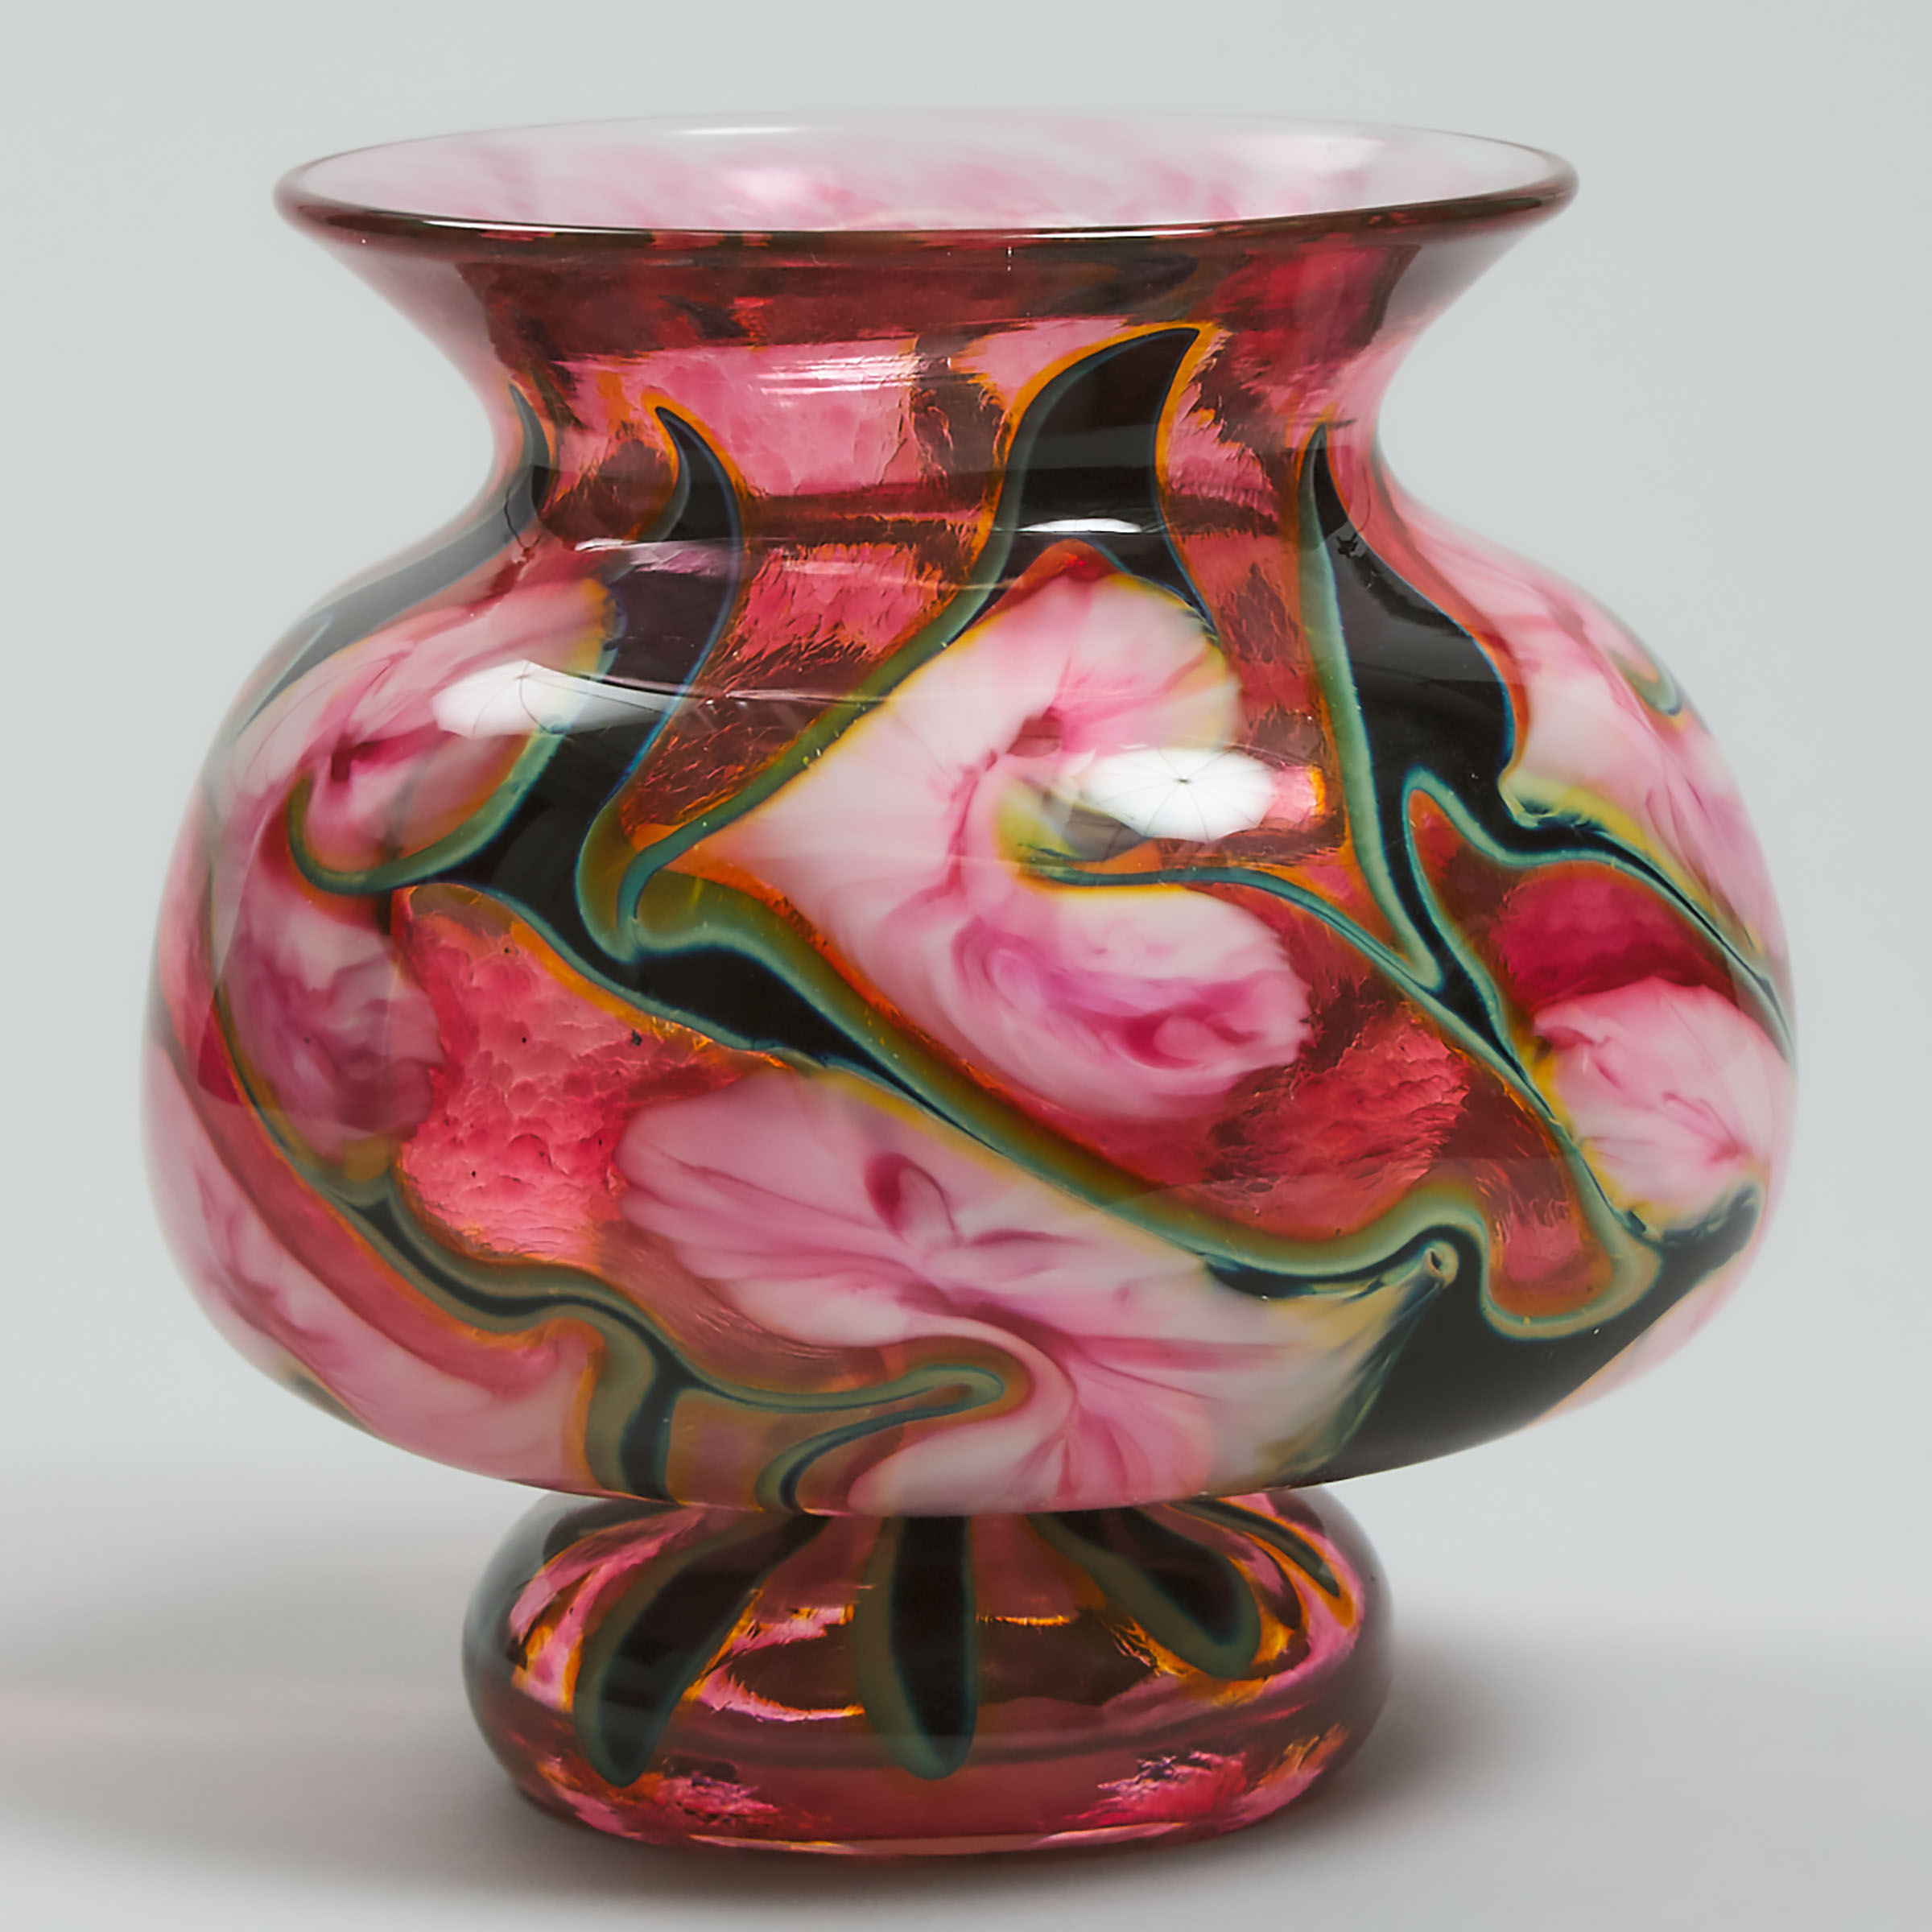 John Lotton (American, b.1964), 'Leaf and Vine' Glass Vase, 1991